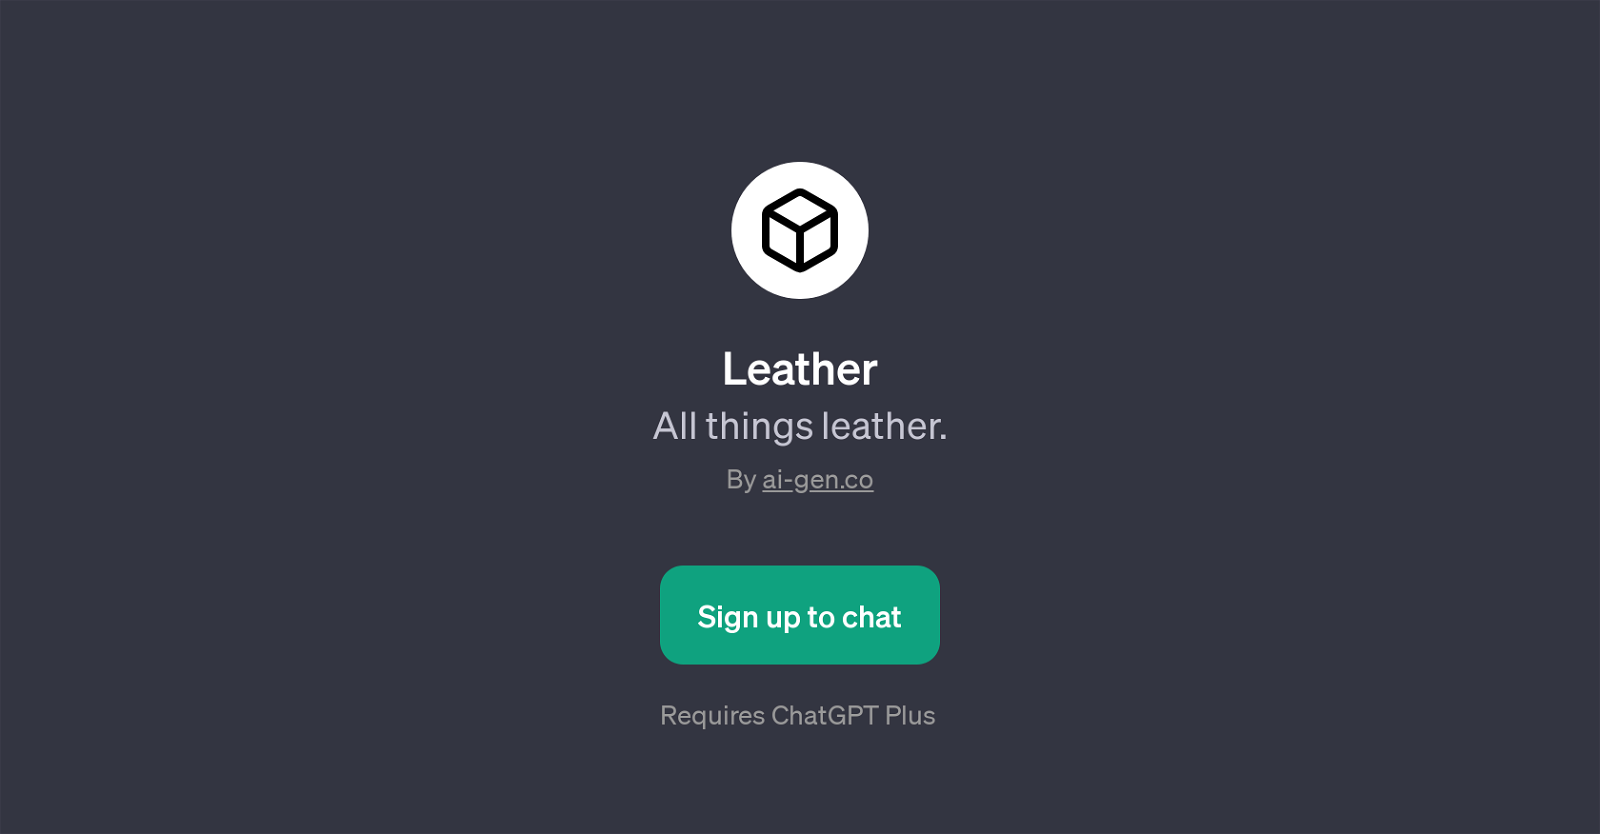 LeatherPage website